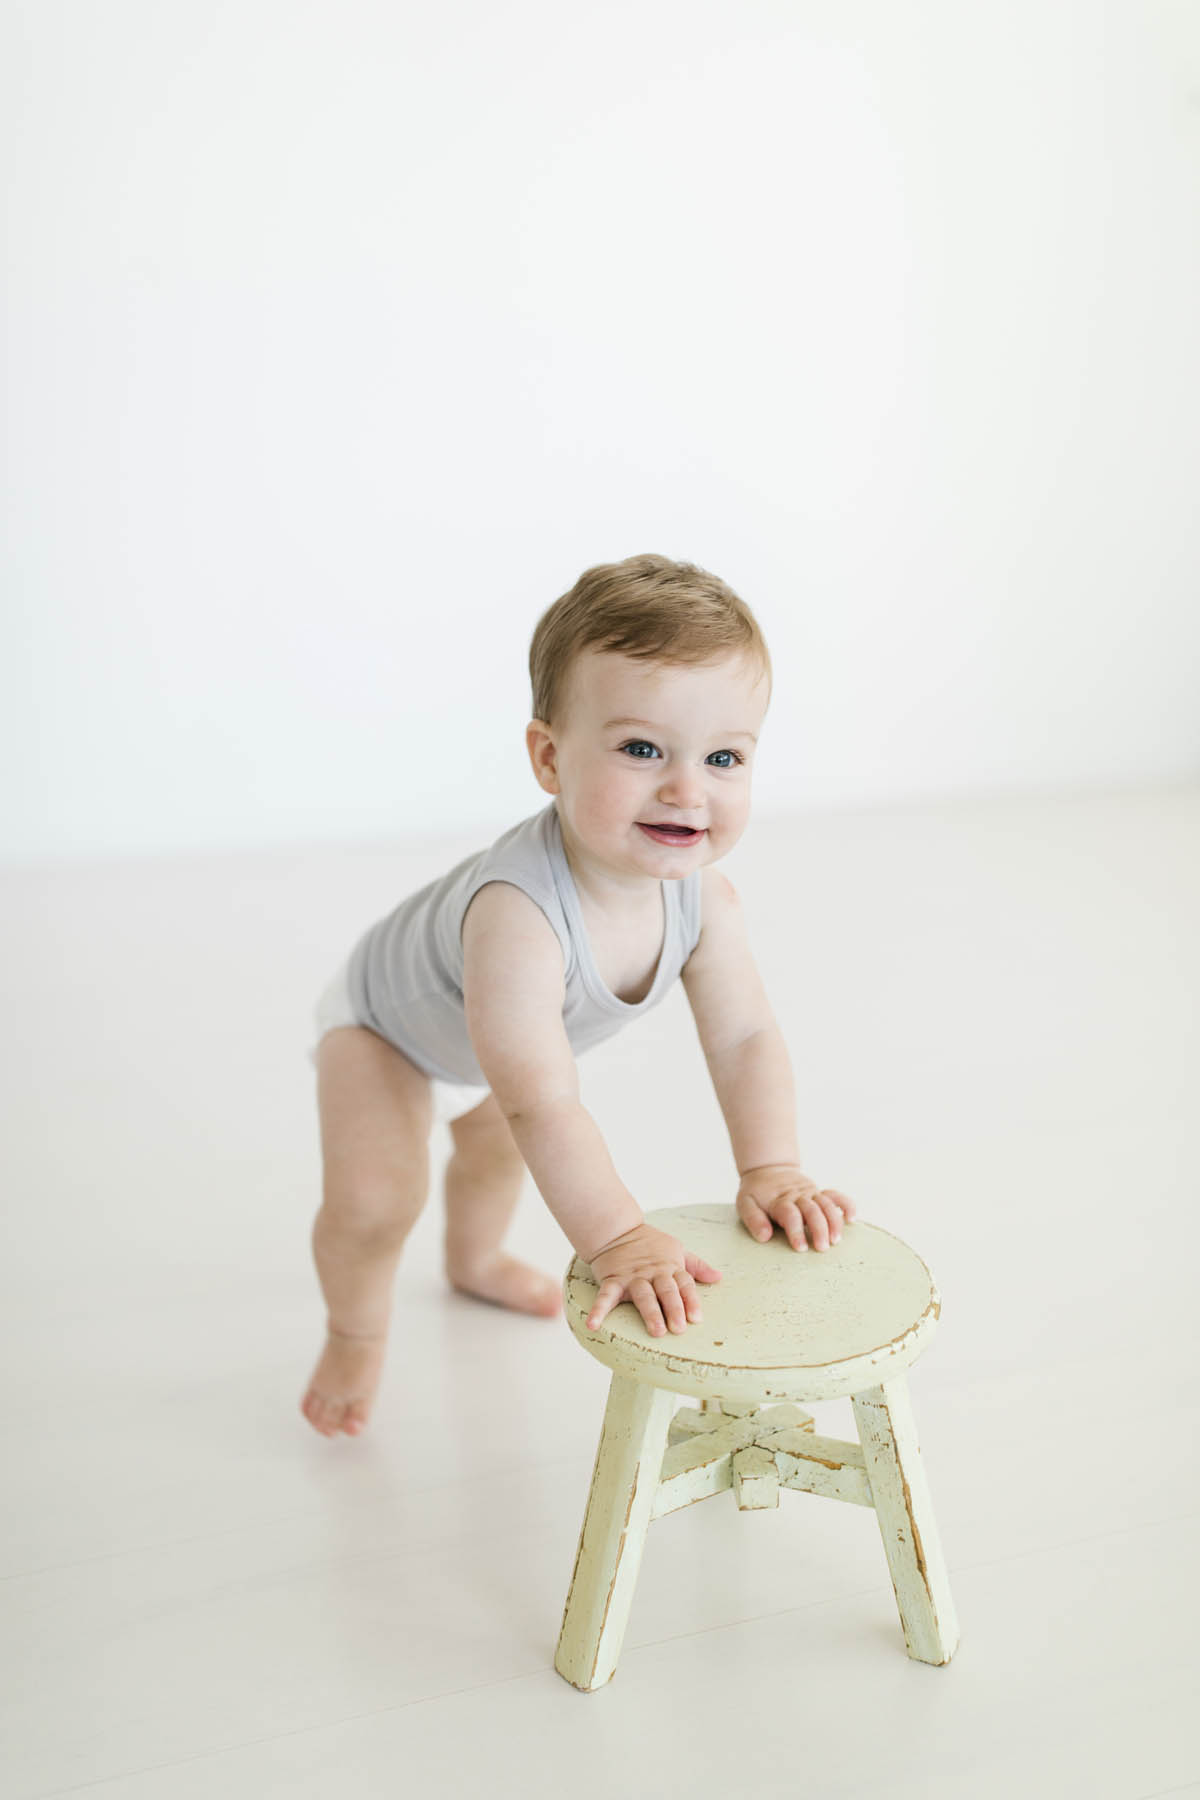 baby boy pushing a stool during photo shoot 